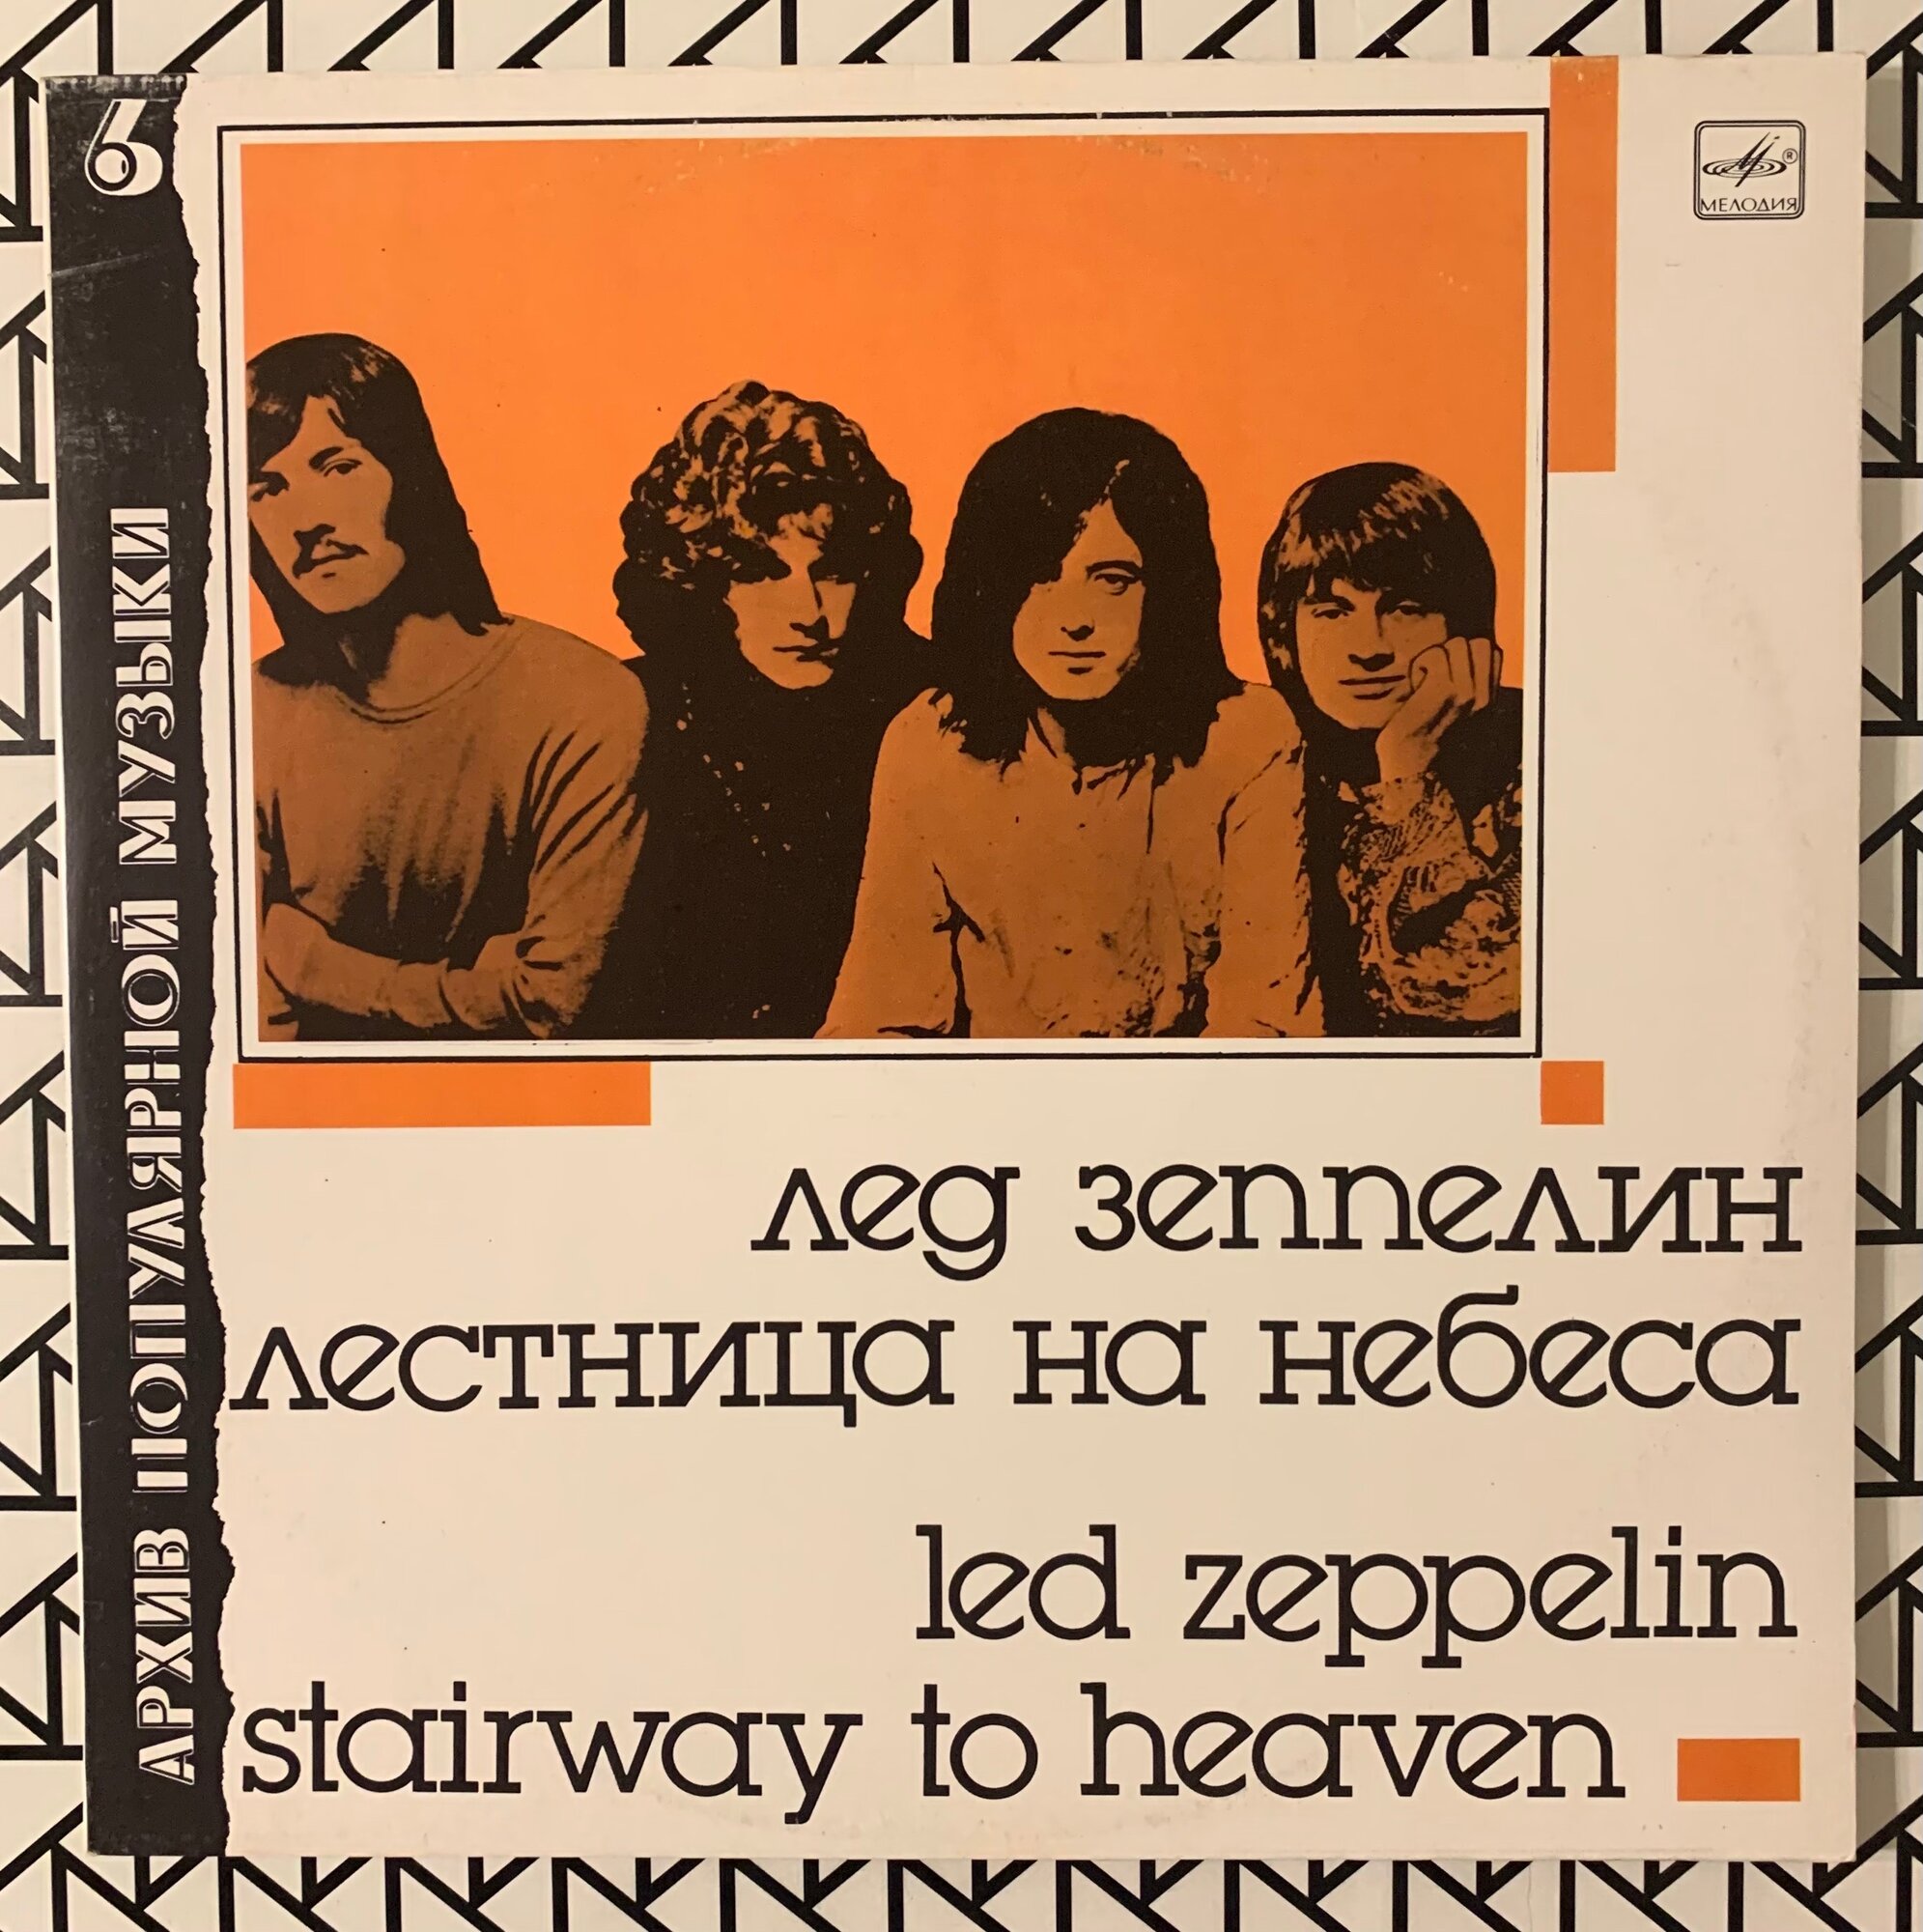 Новая виниловая пластинка «Led Zeppelin/Лед Зеппелин - Лестница На Небеса»